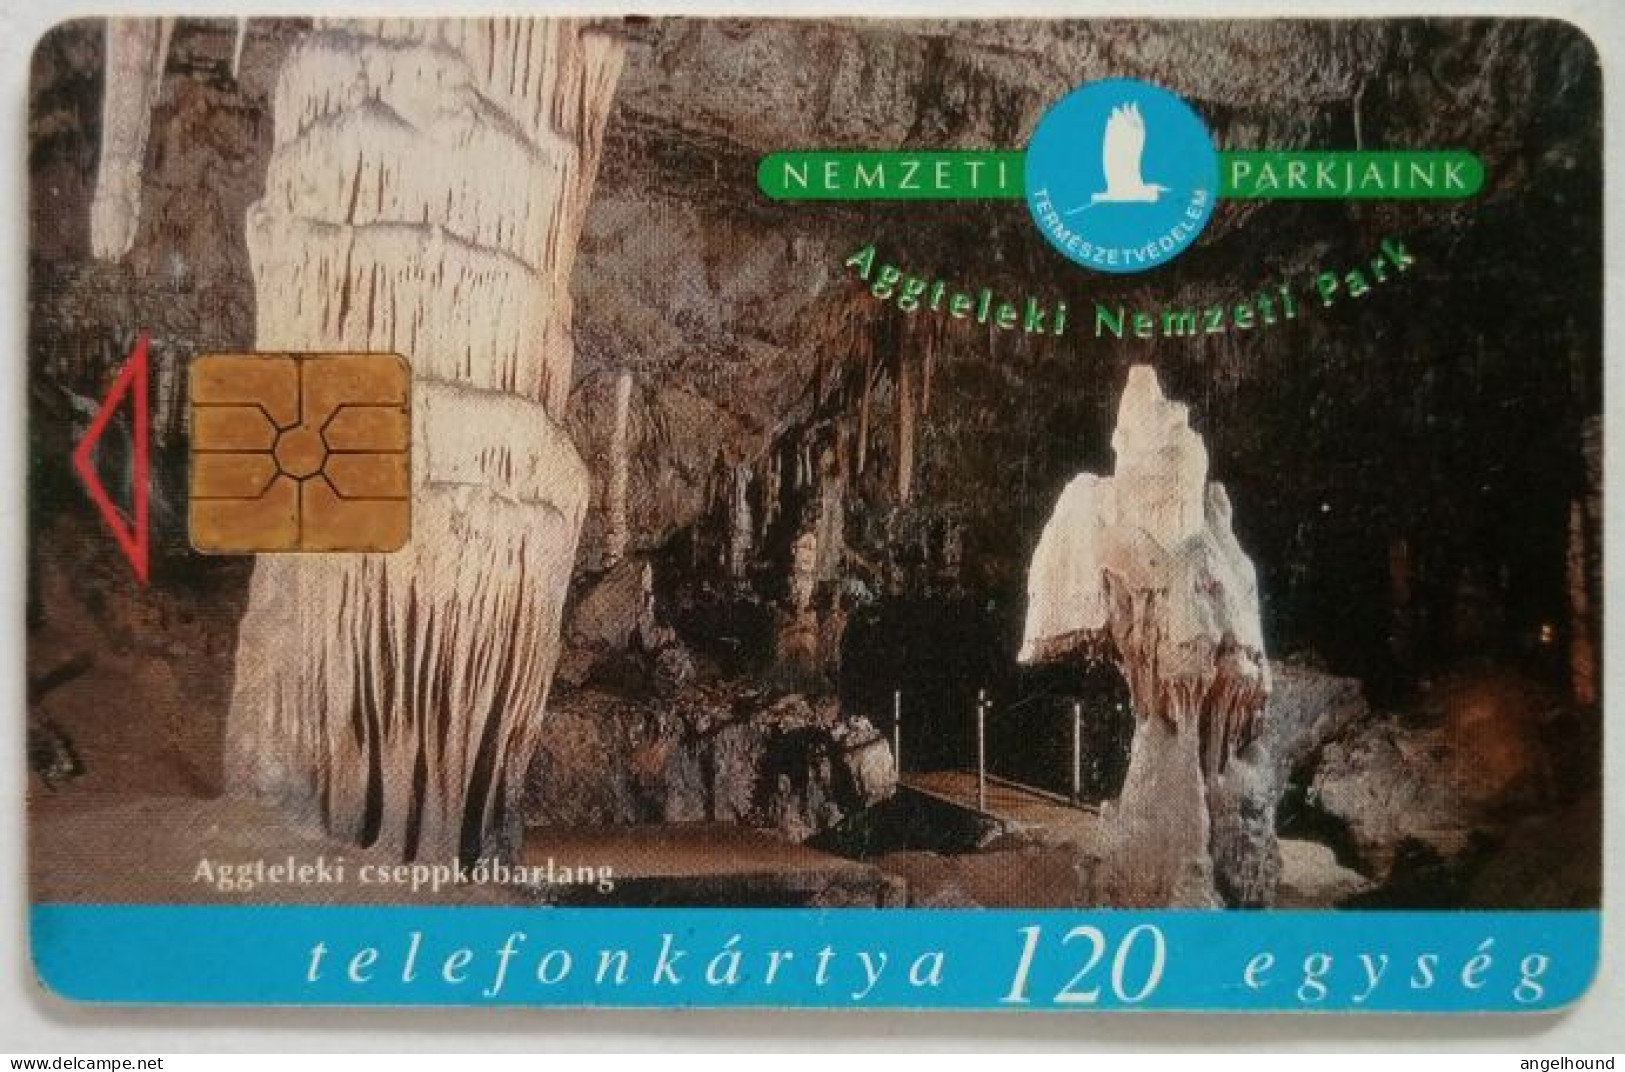 Hungary 120 Units Chip Card - AggtelekiNemzeti Park - Hungary